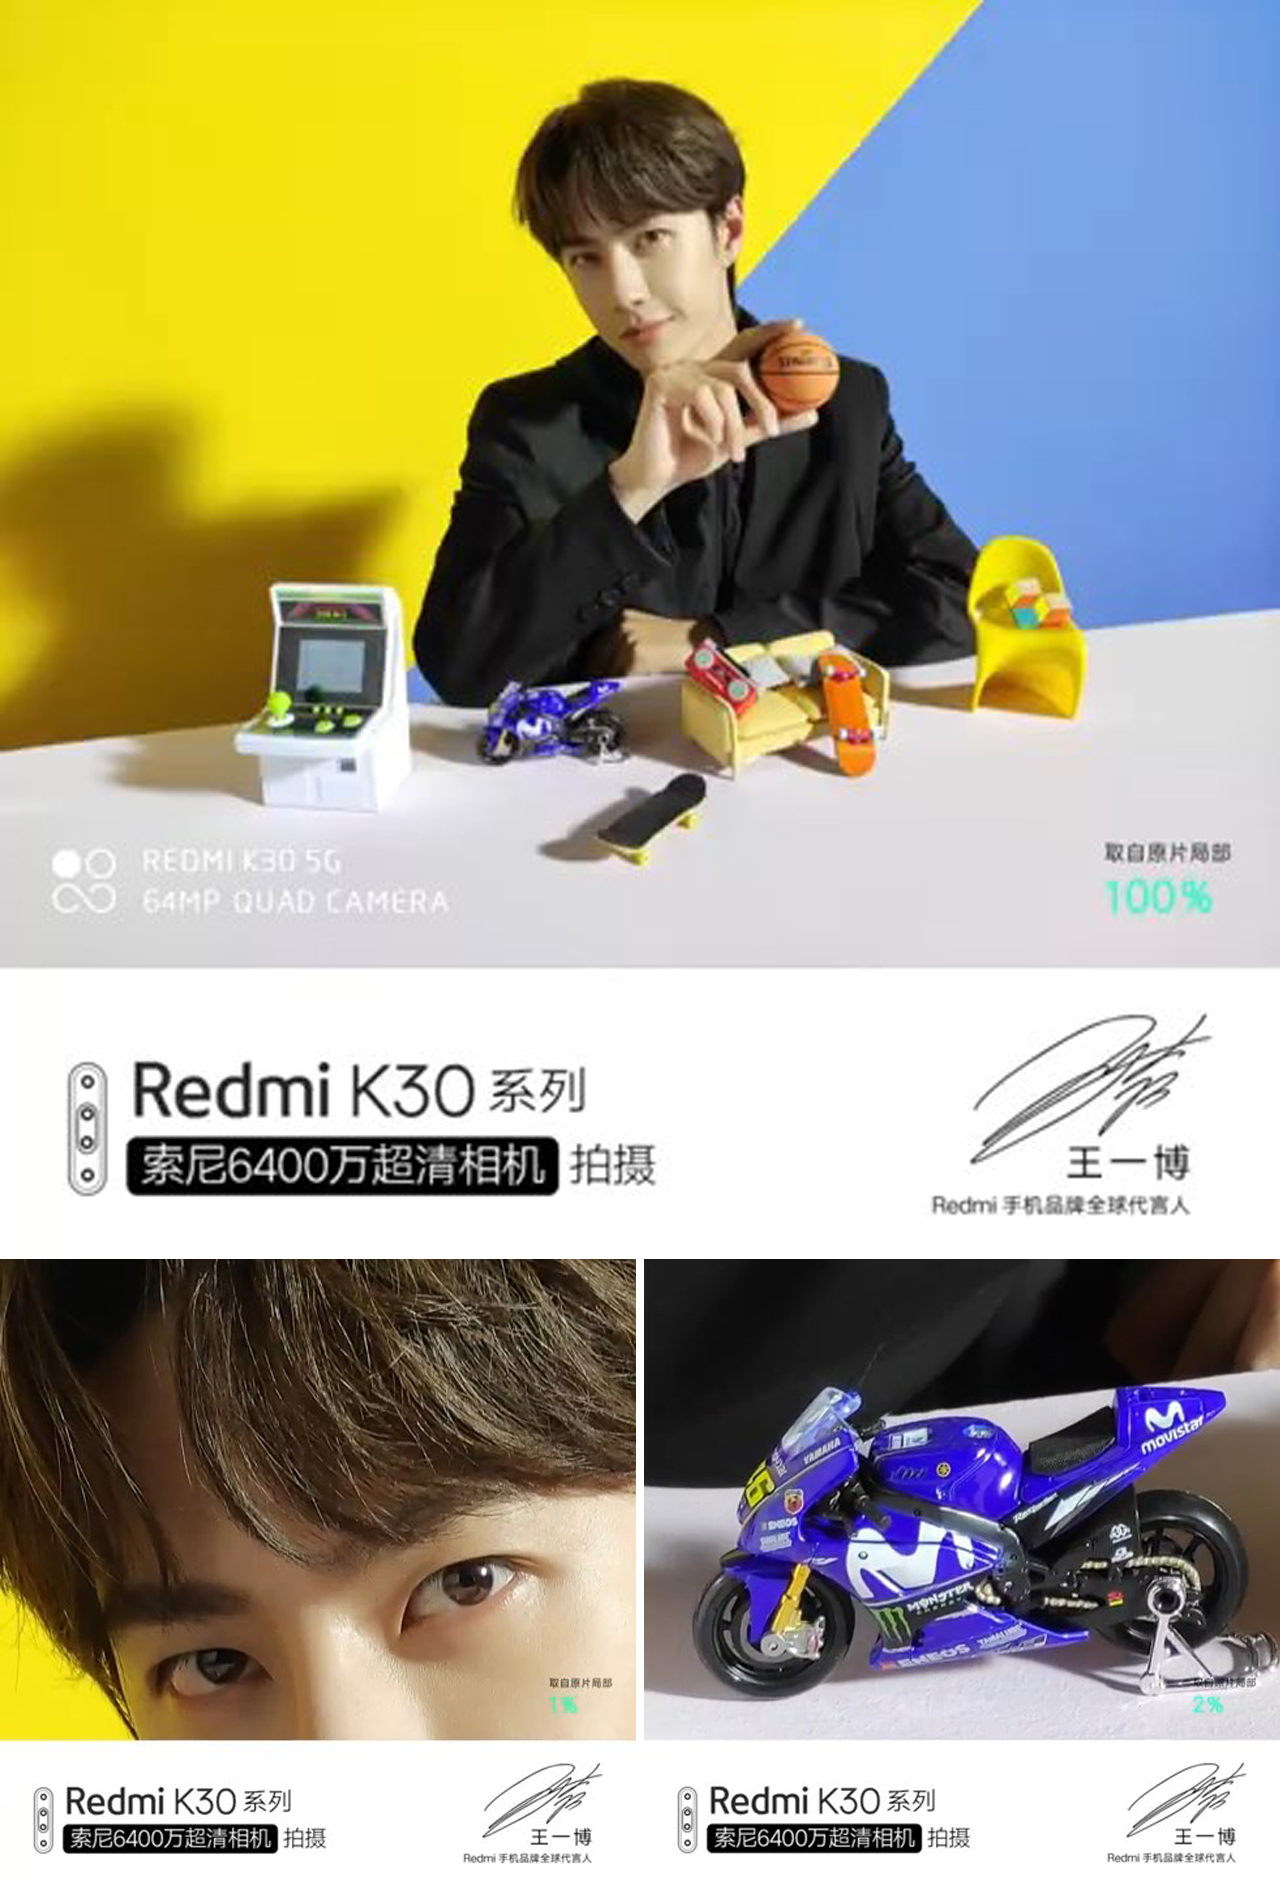 redi k30 features sony im686 sensor 1